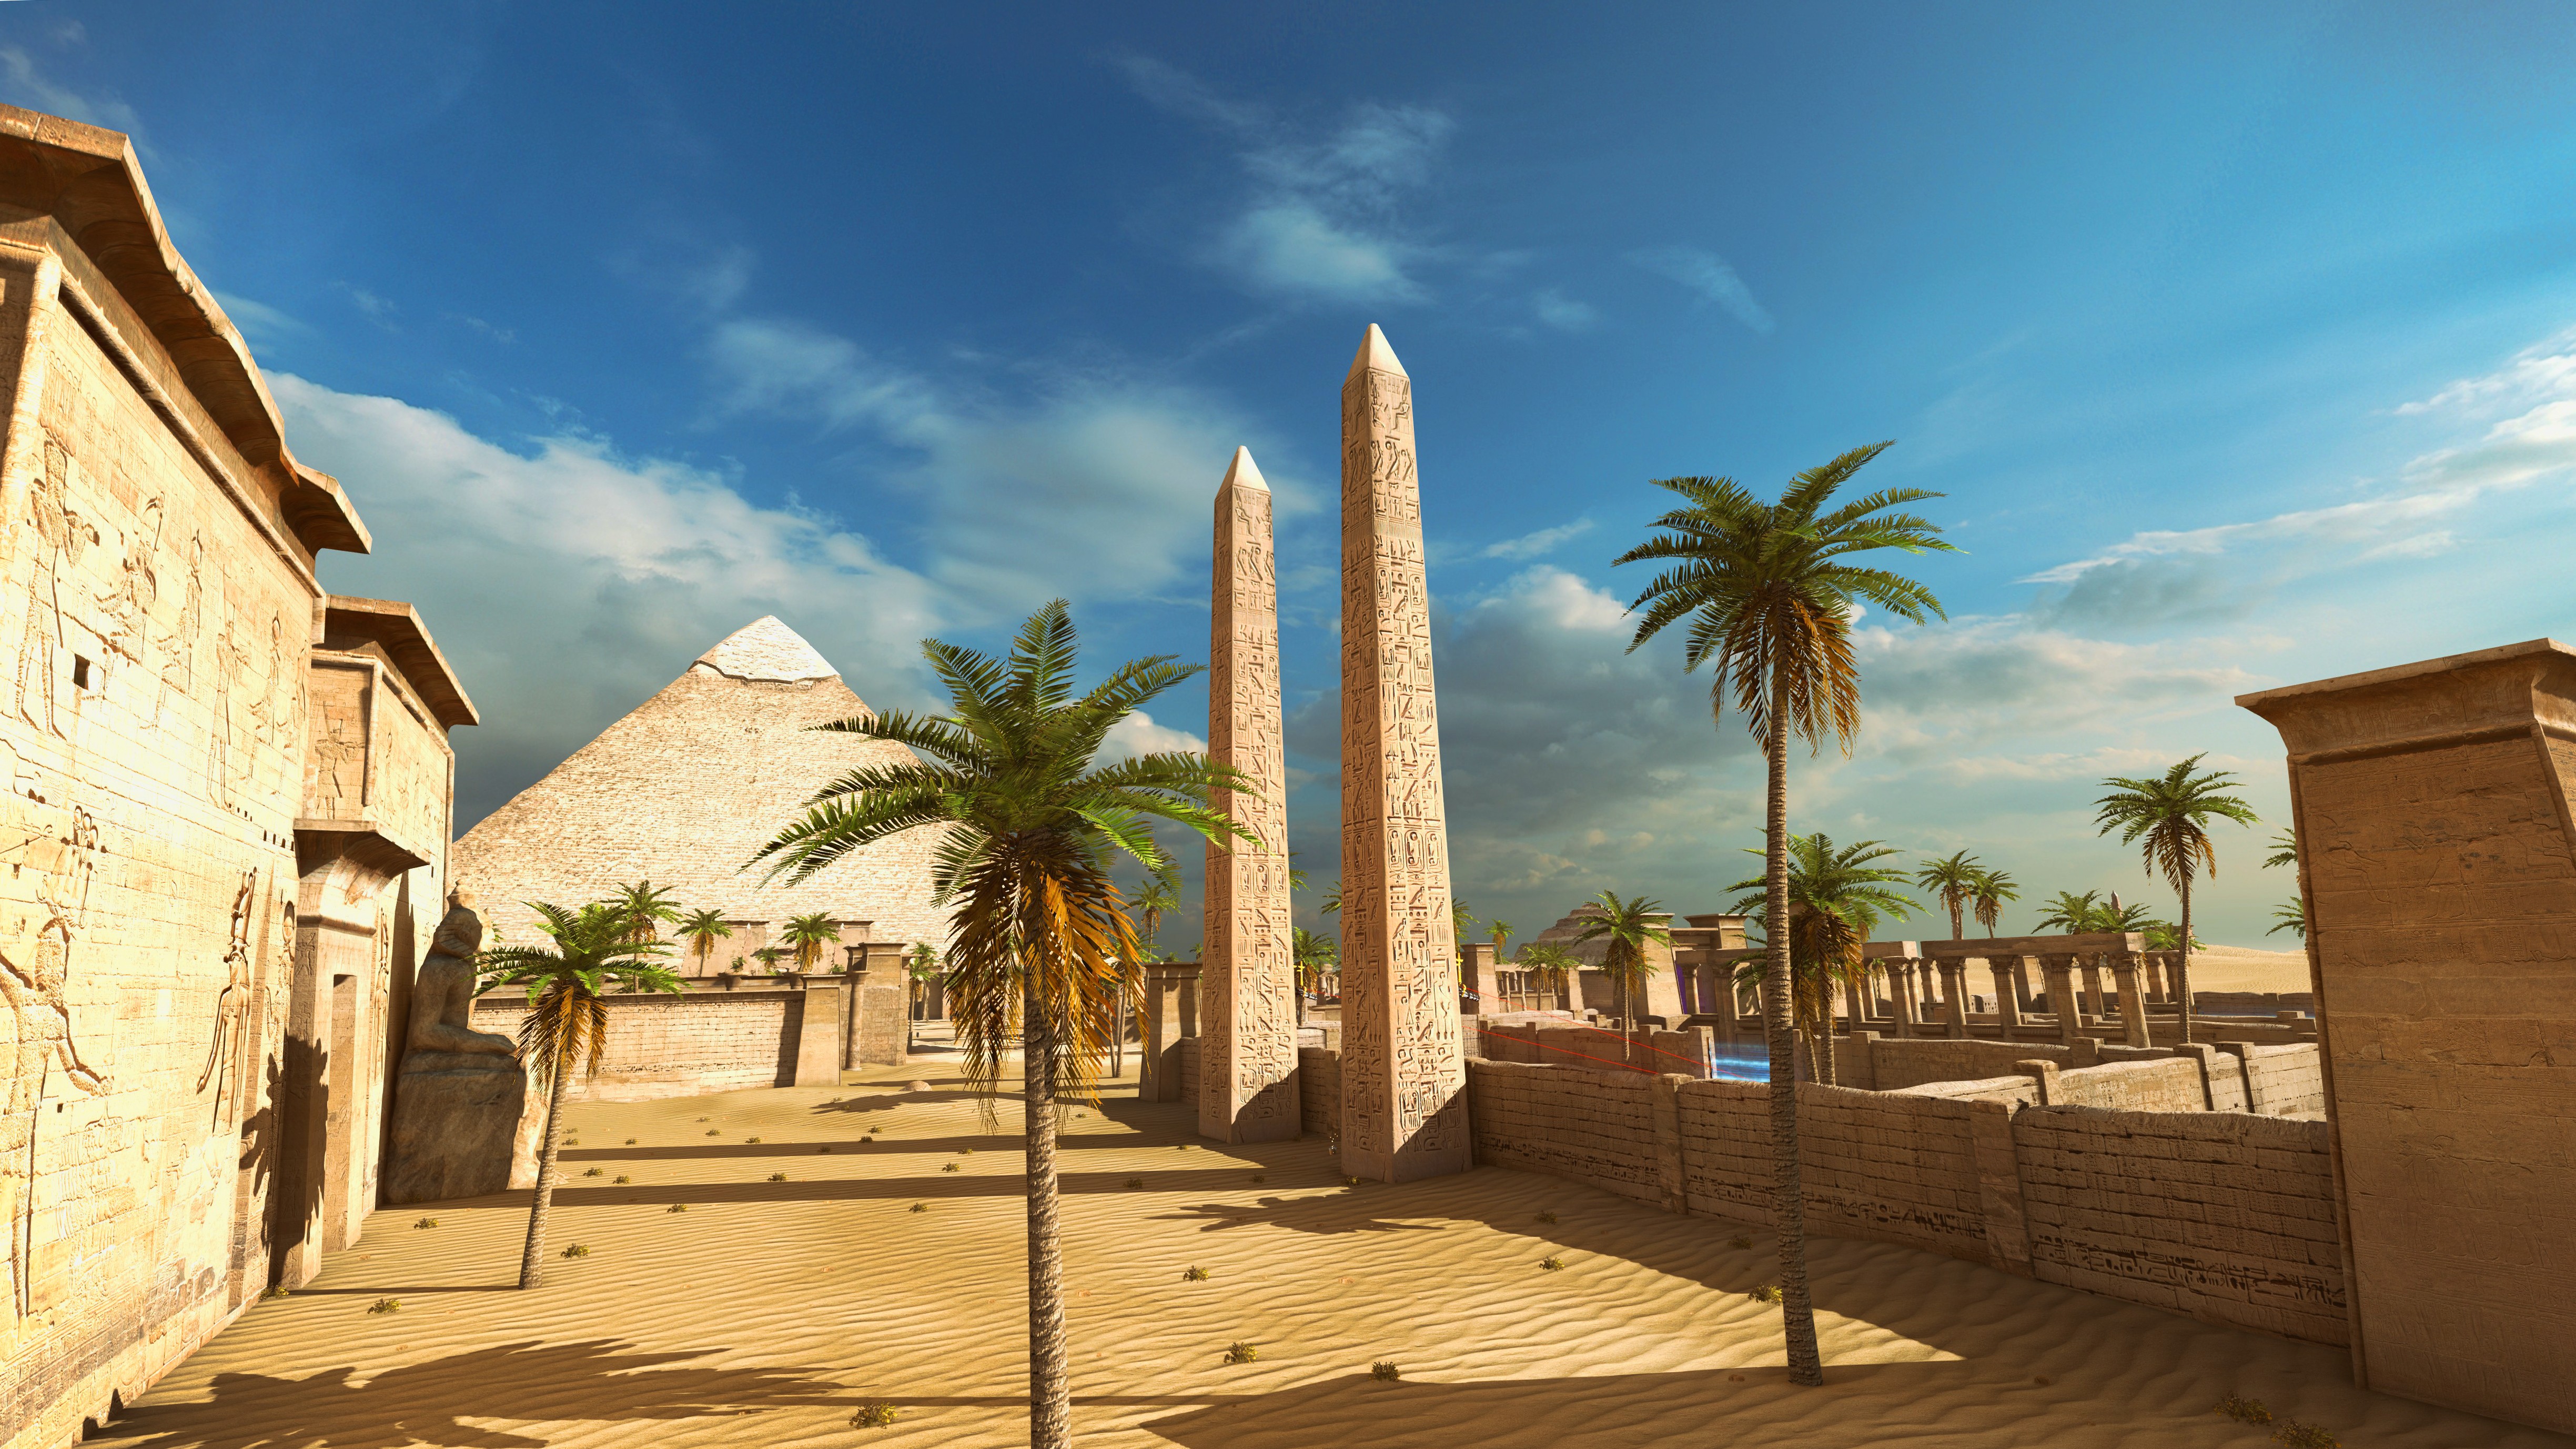 The Talos Principle, Screen shot, Video games, Pyramid, Obelisk, Palm trees, Egypt, Egyptian, Sand, Sky Wallpaper